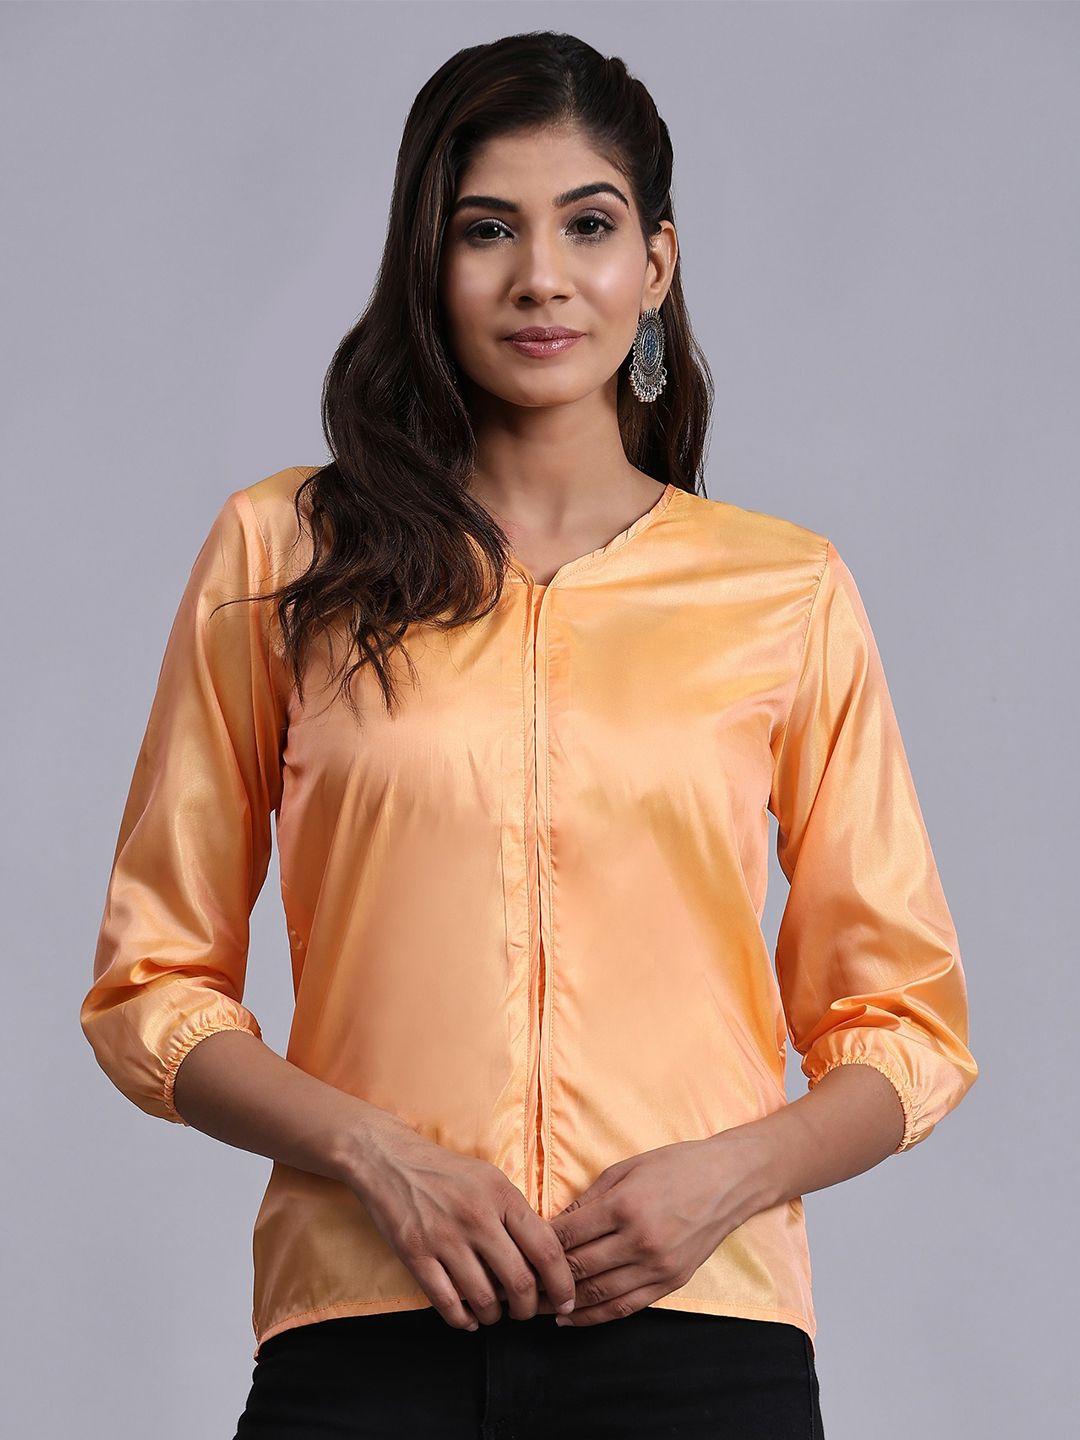 v tradition orange crepe shirt style top